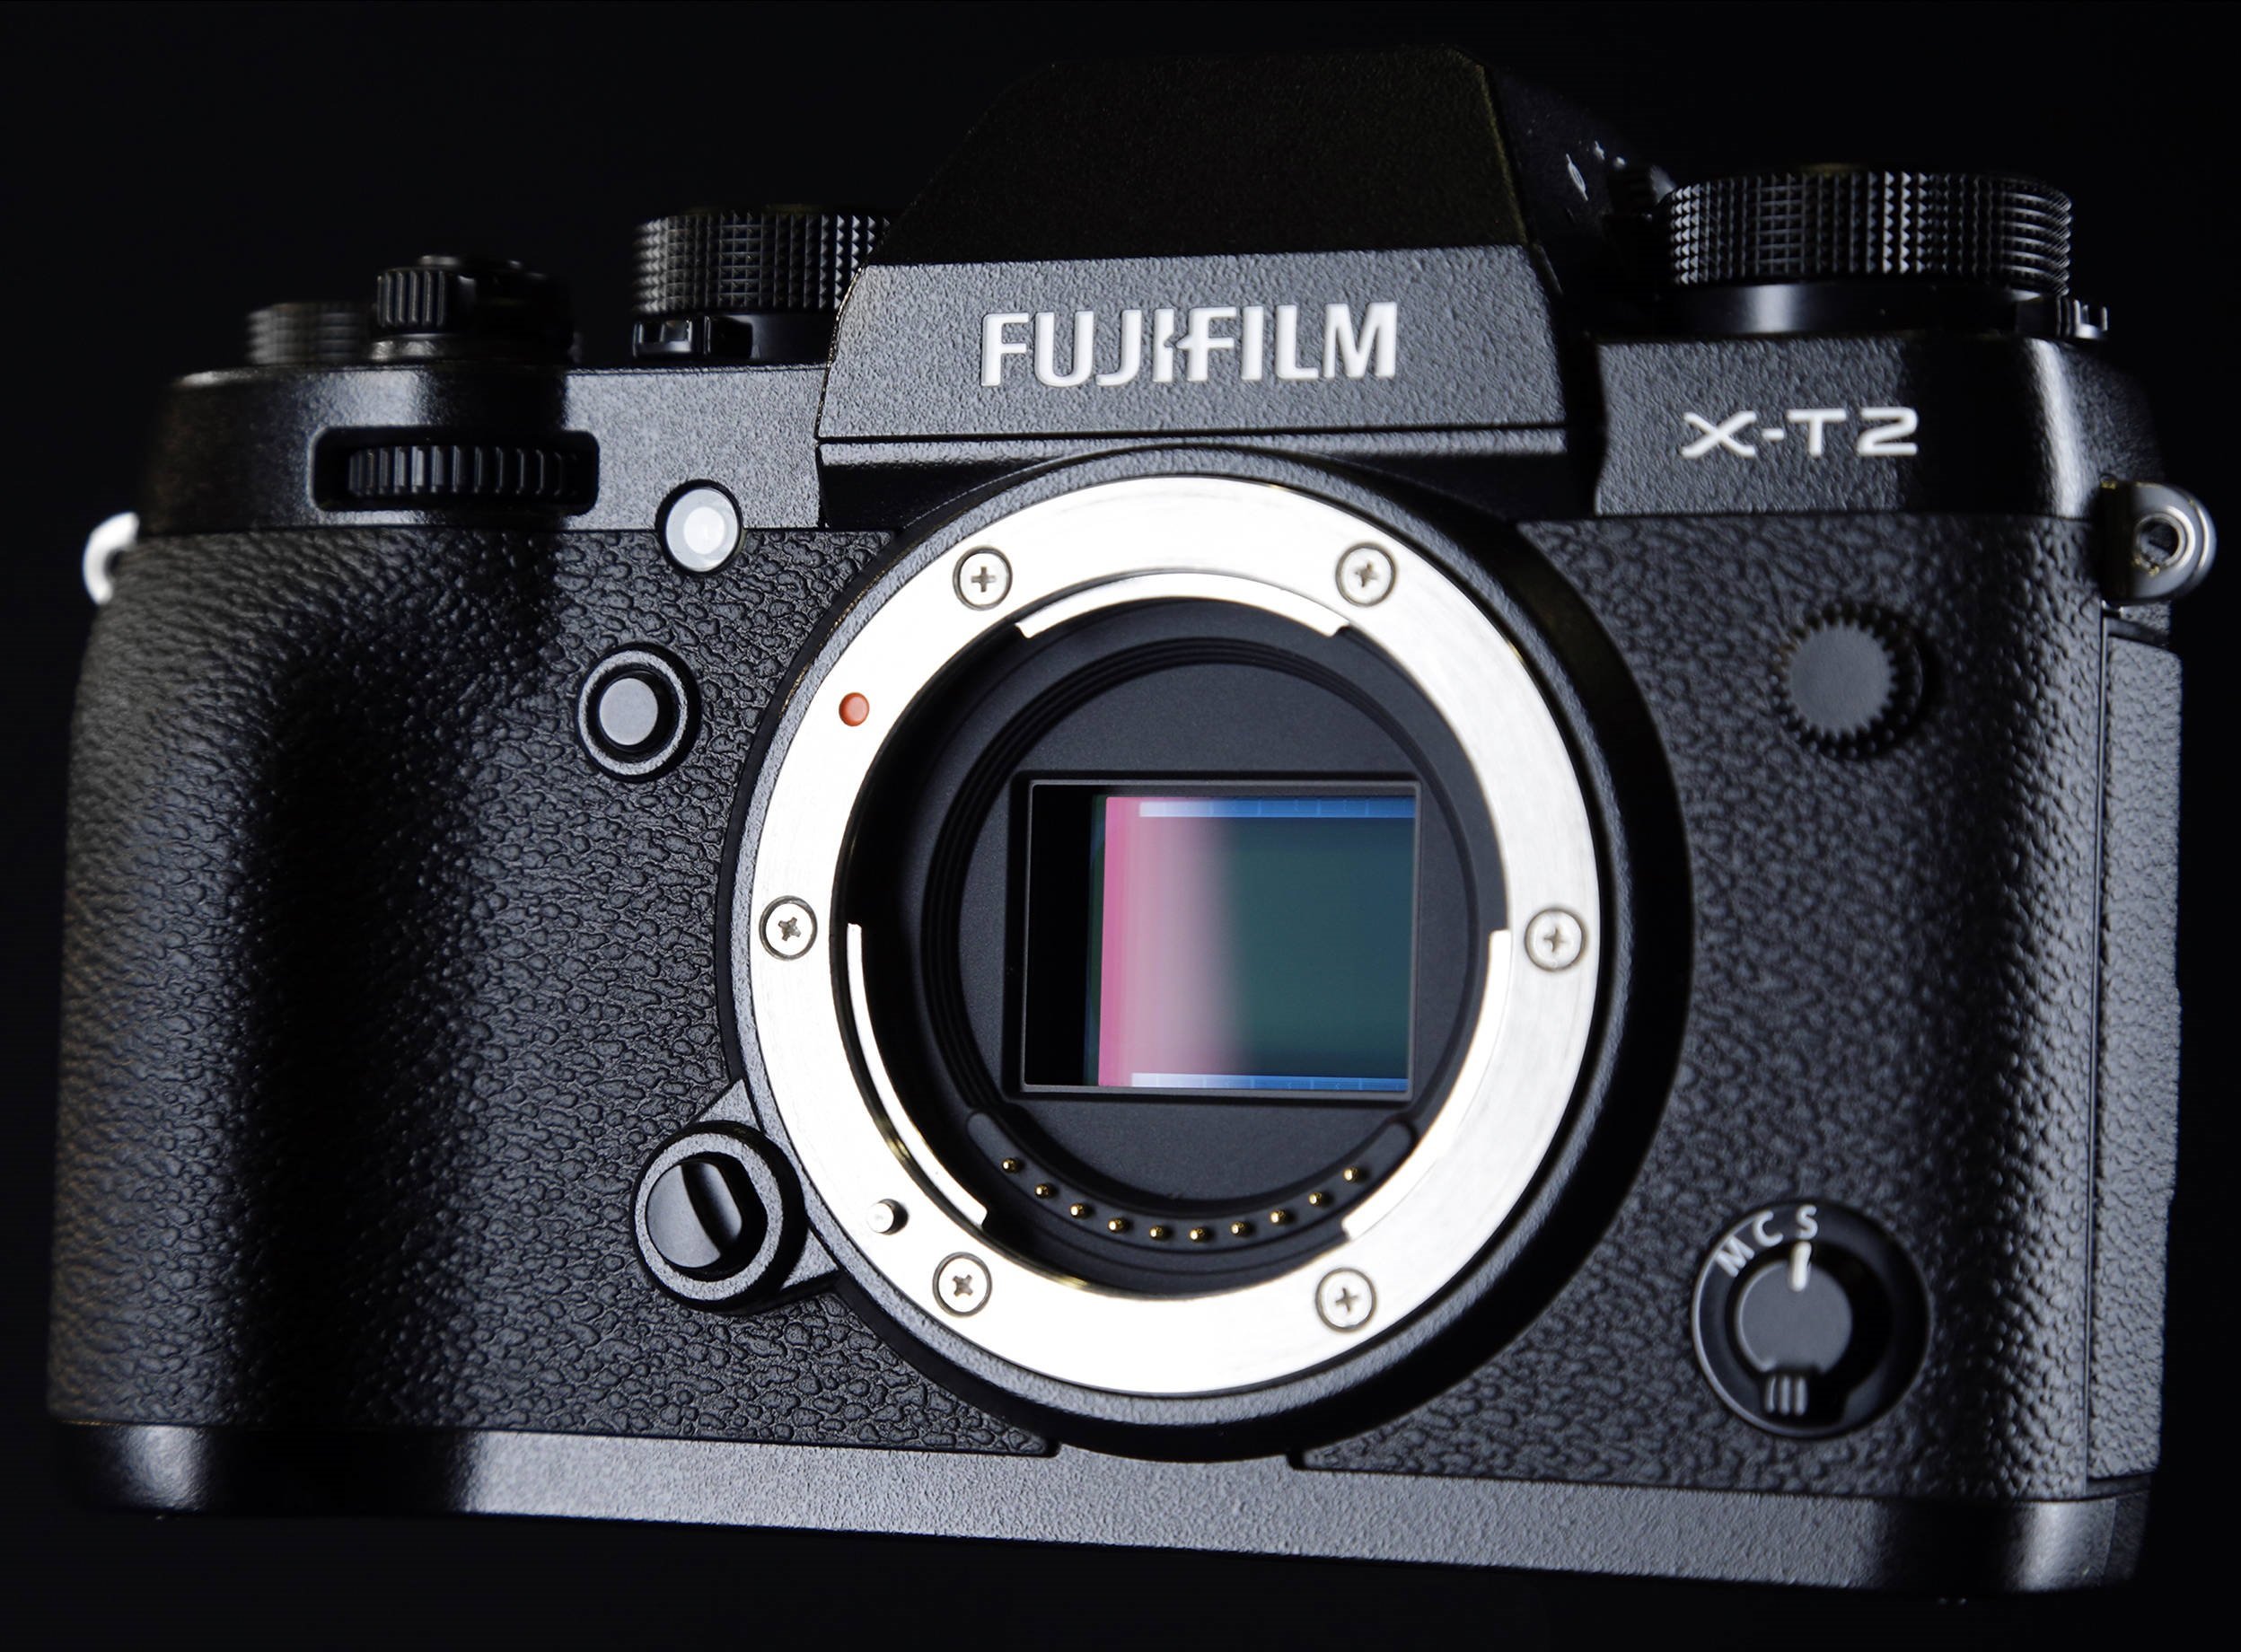 Fujifilm X-T2 - Cảm biến 24.3 MP